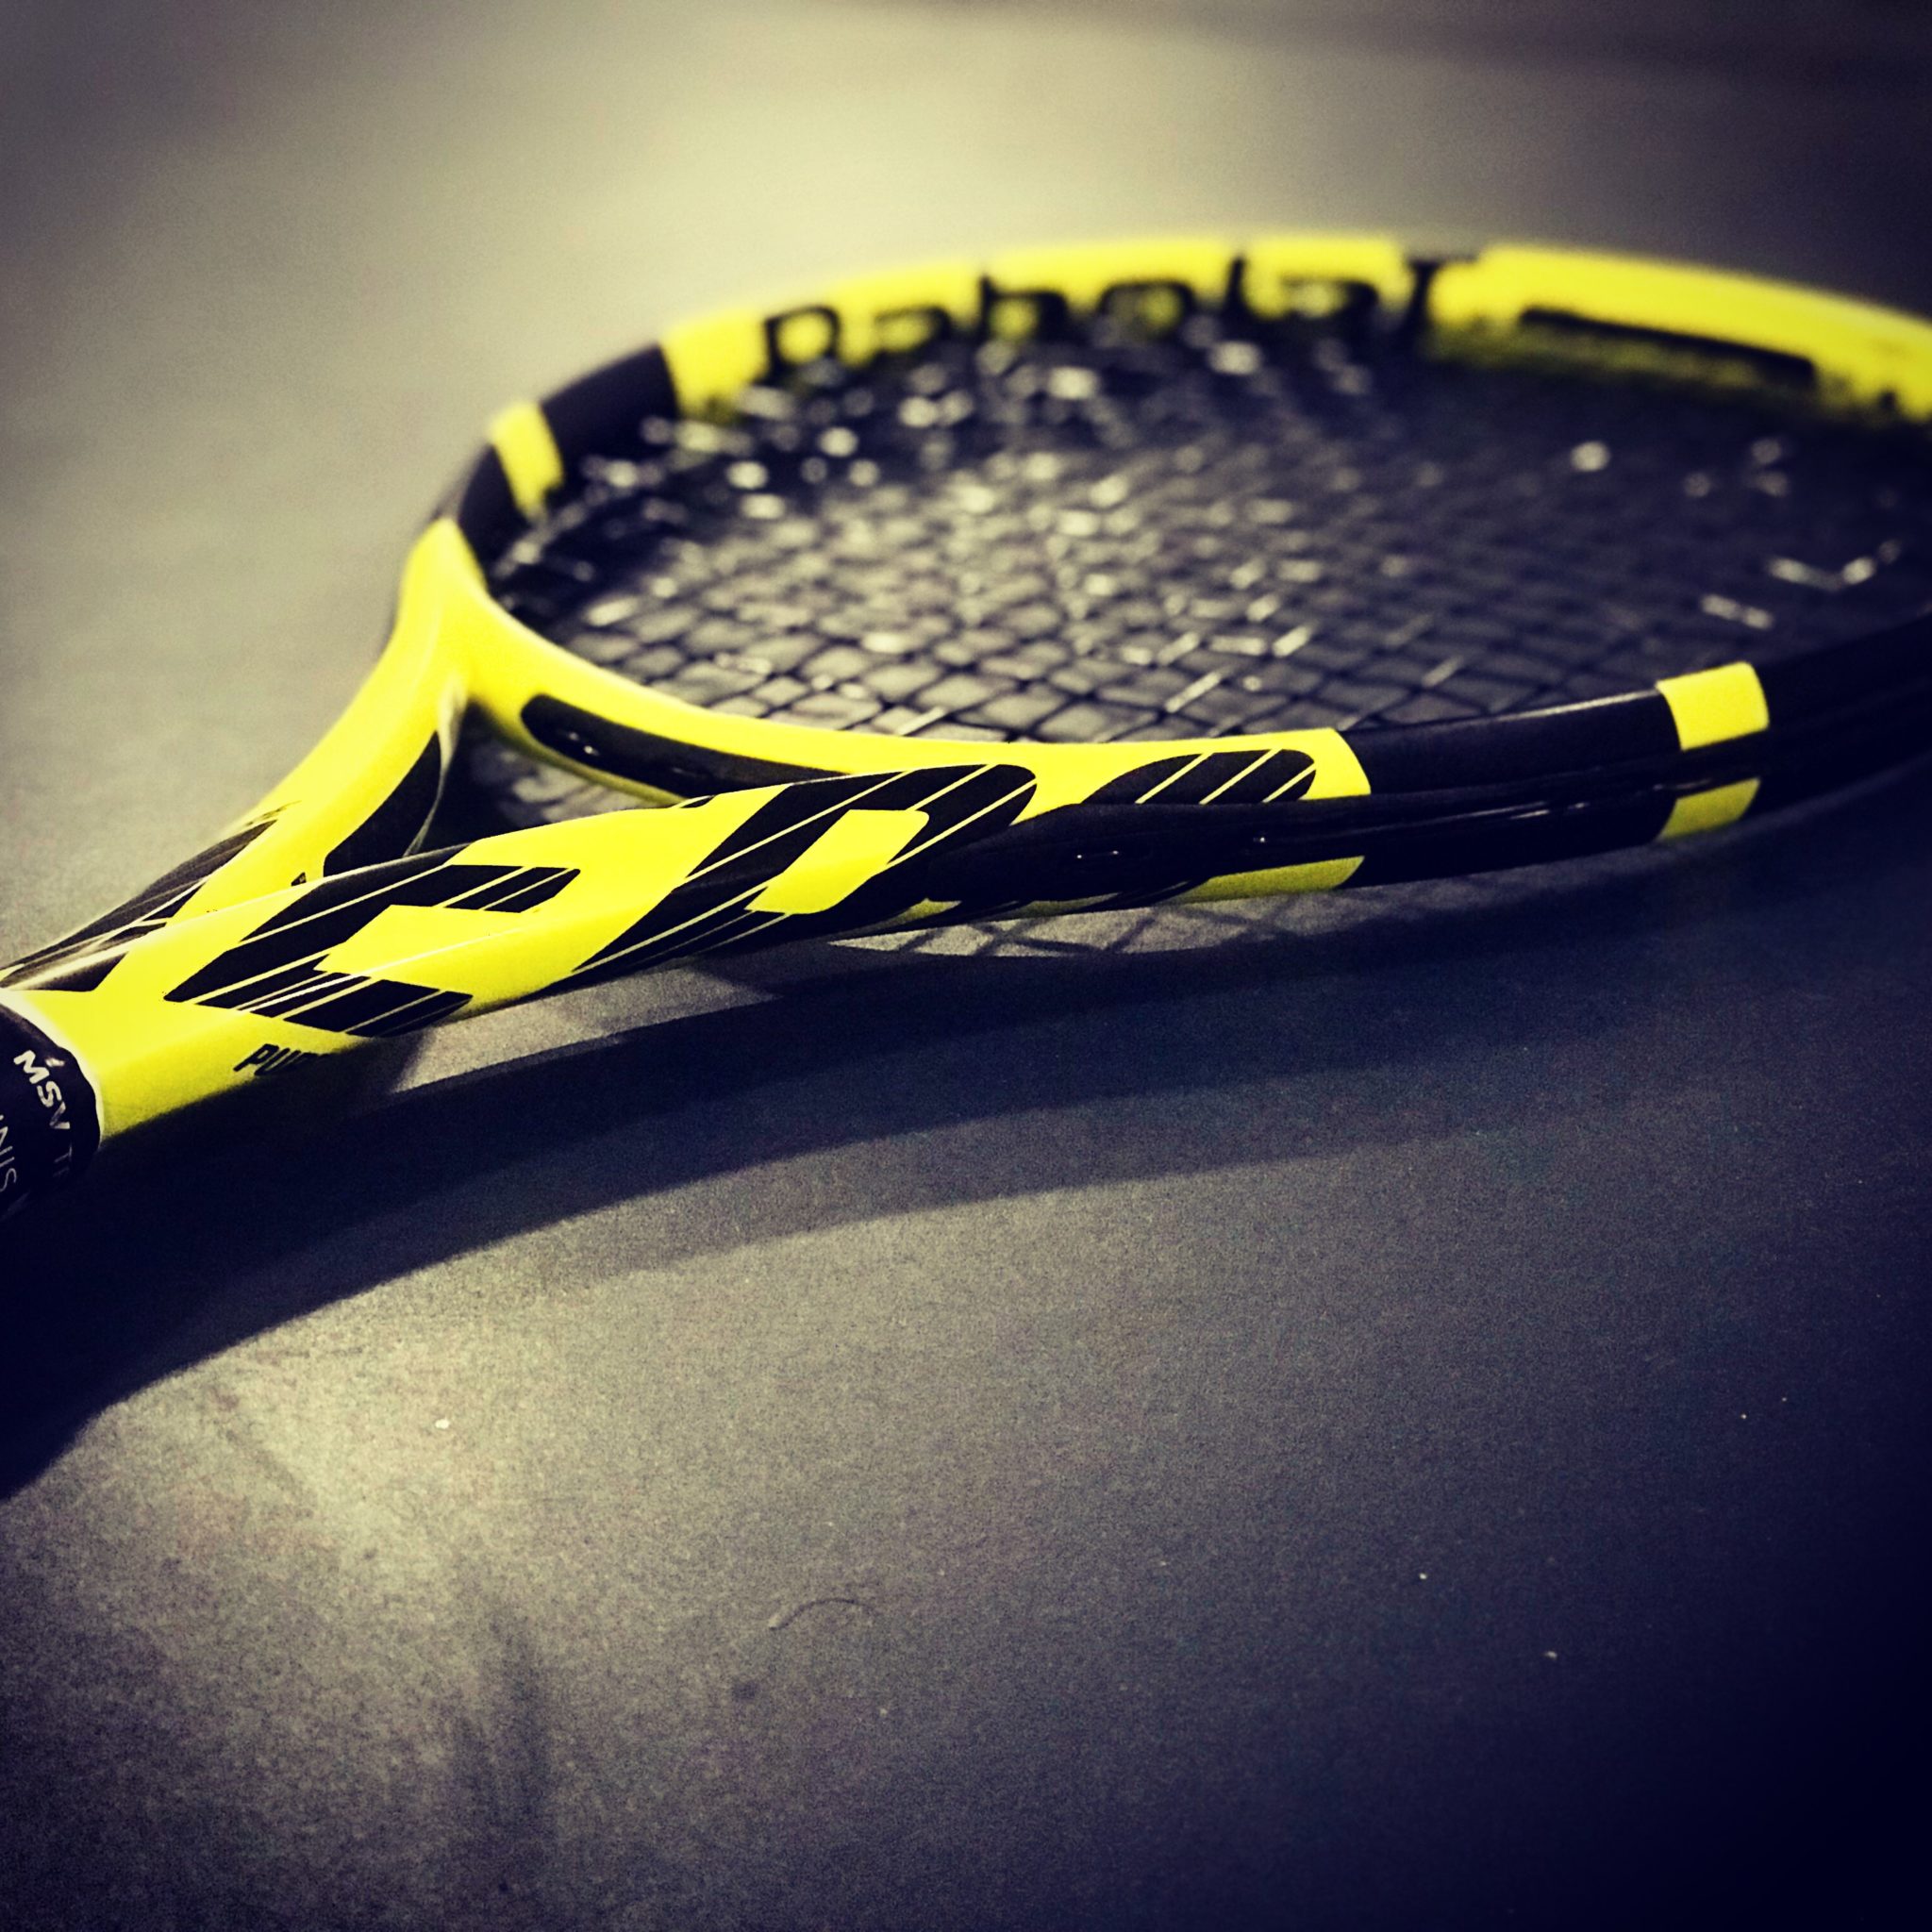 Babolat Aero Tennis Racquet Vibration Dampener 3 PACK 